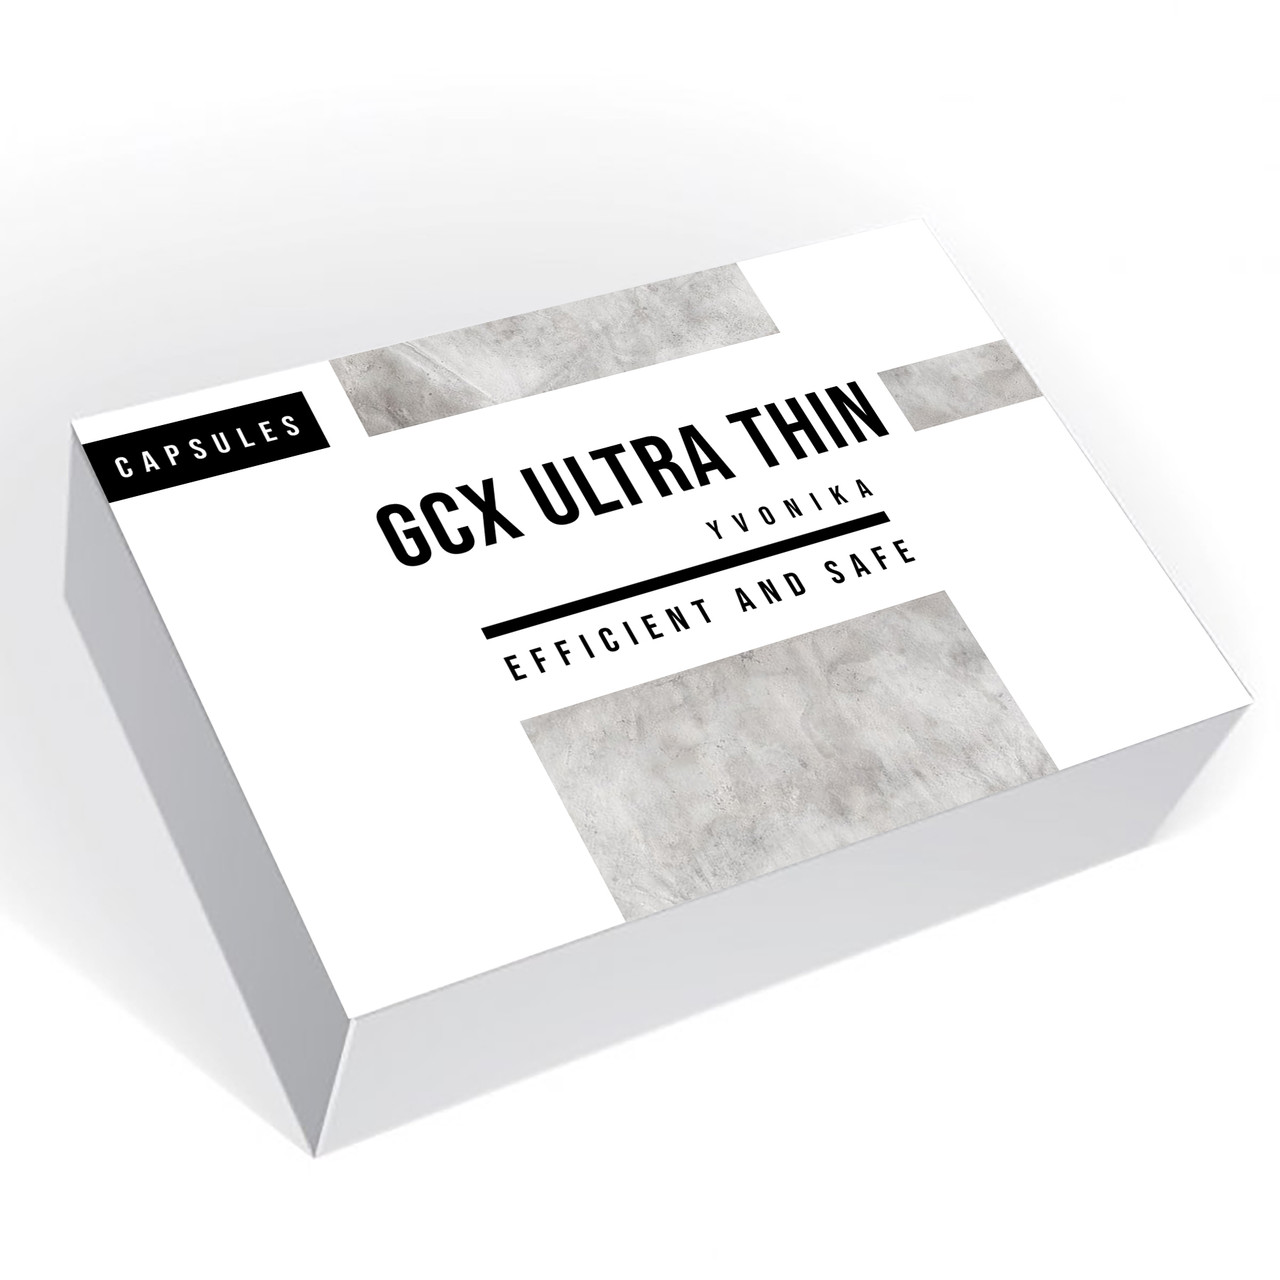 GCX Ultra Thin (ДжіЦІкс Ультра Тхина)